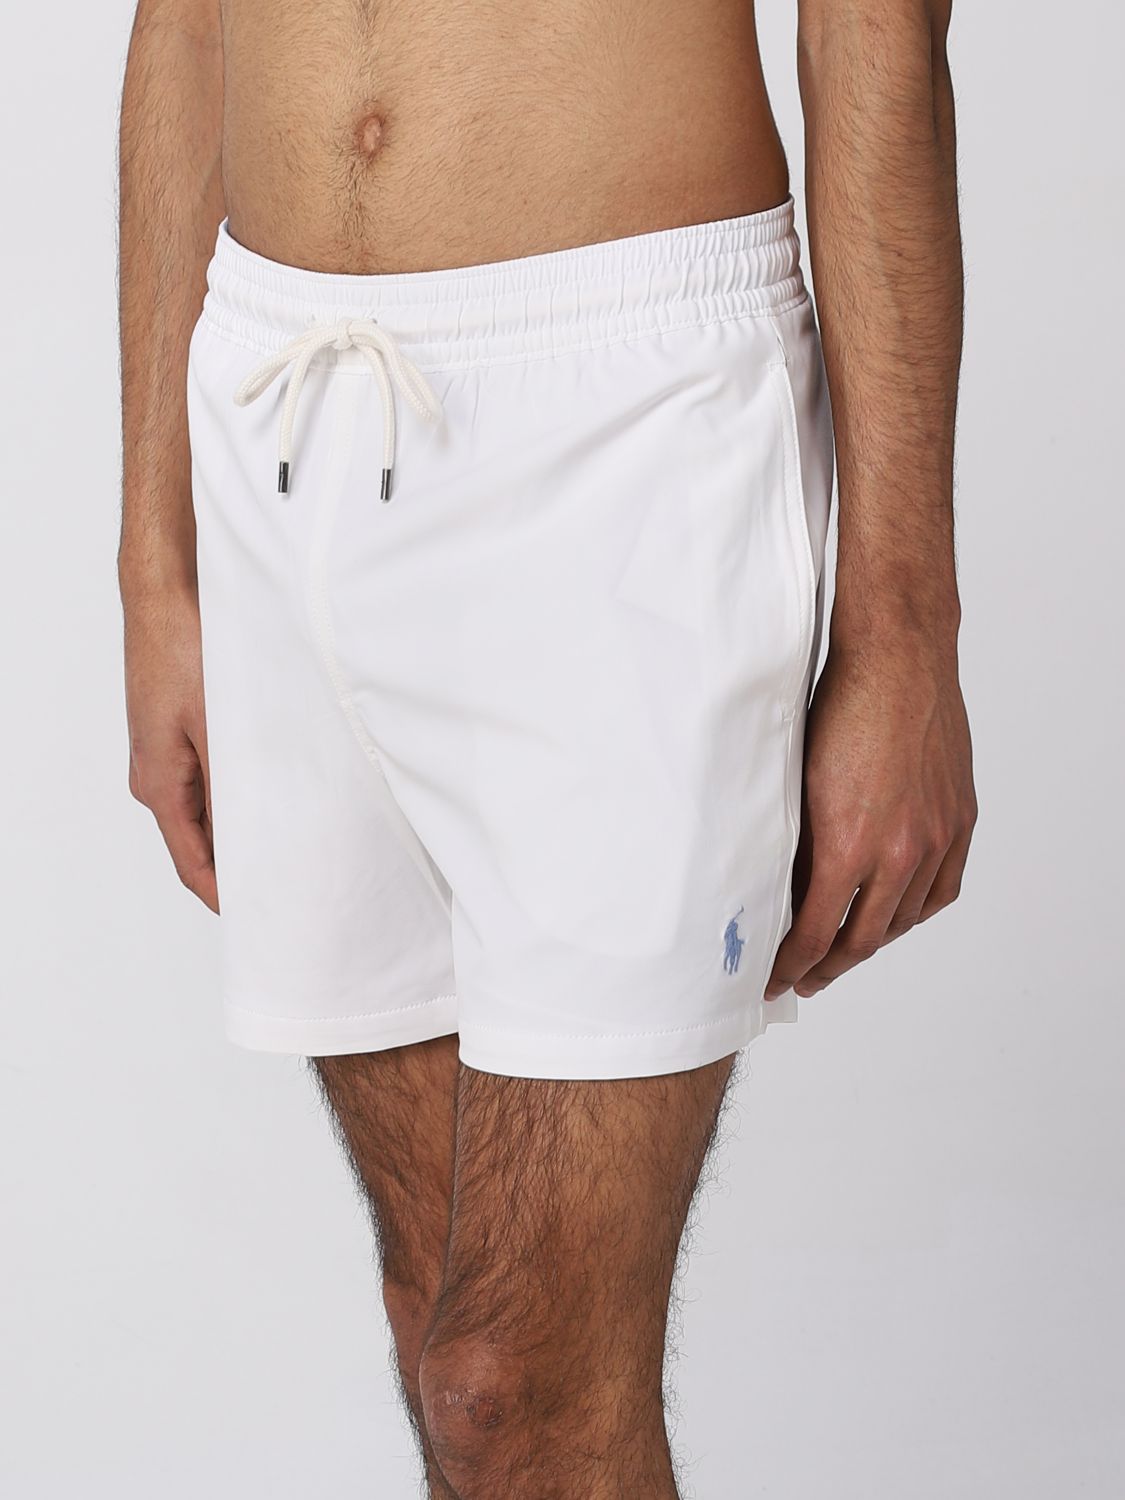 POLO RALPH LAUREN: swimsuit for man - White | Polo Ralph swimsuit 710910260 online on